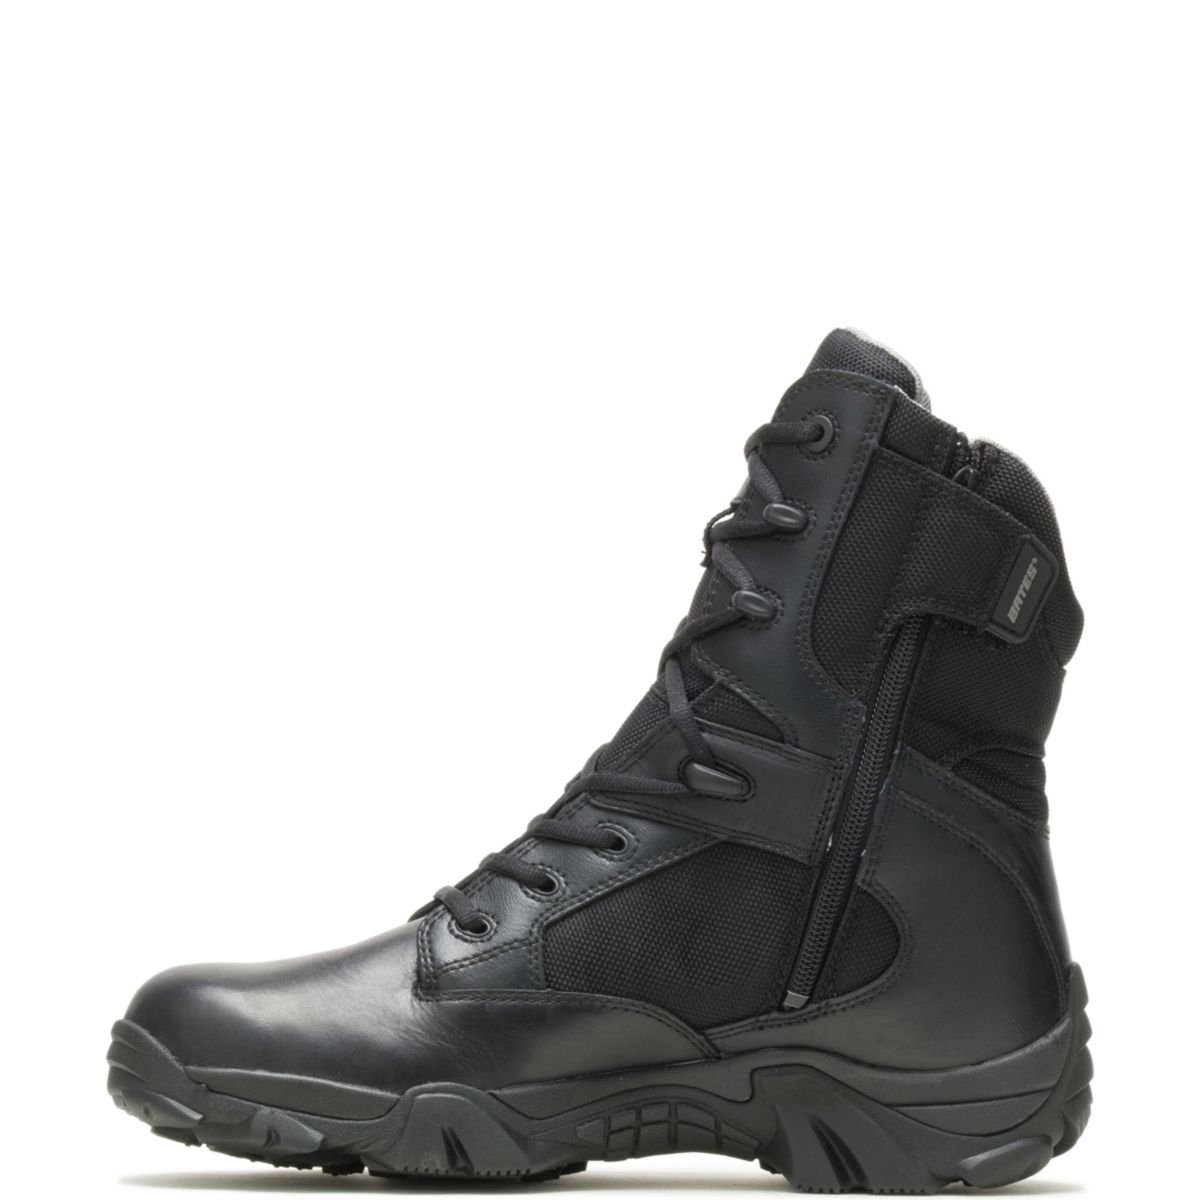 Bates Men's GX-8 Side-Zip GORE-TEXÂ® Waterproof Boot Black - E02268 BLACK - BLACK, 11.5-EW